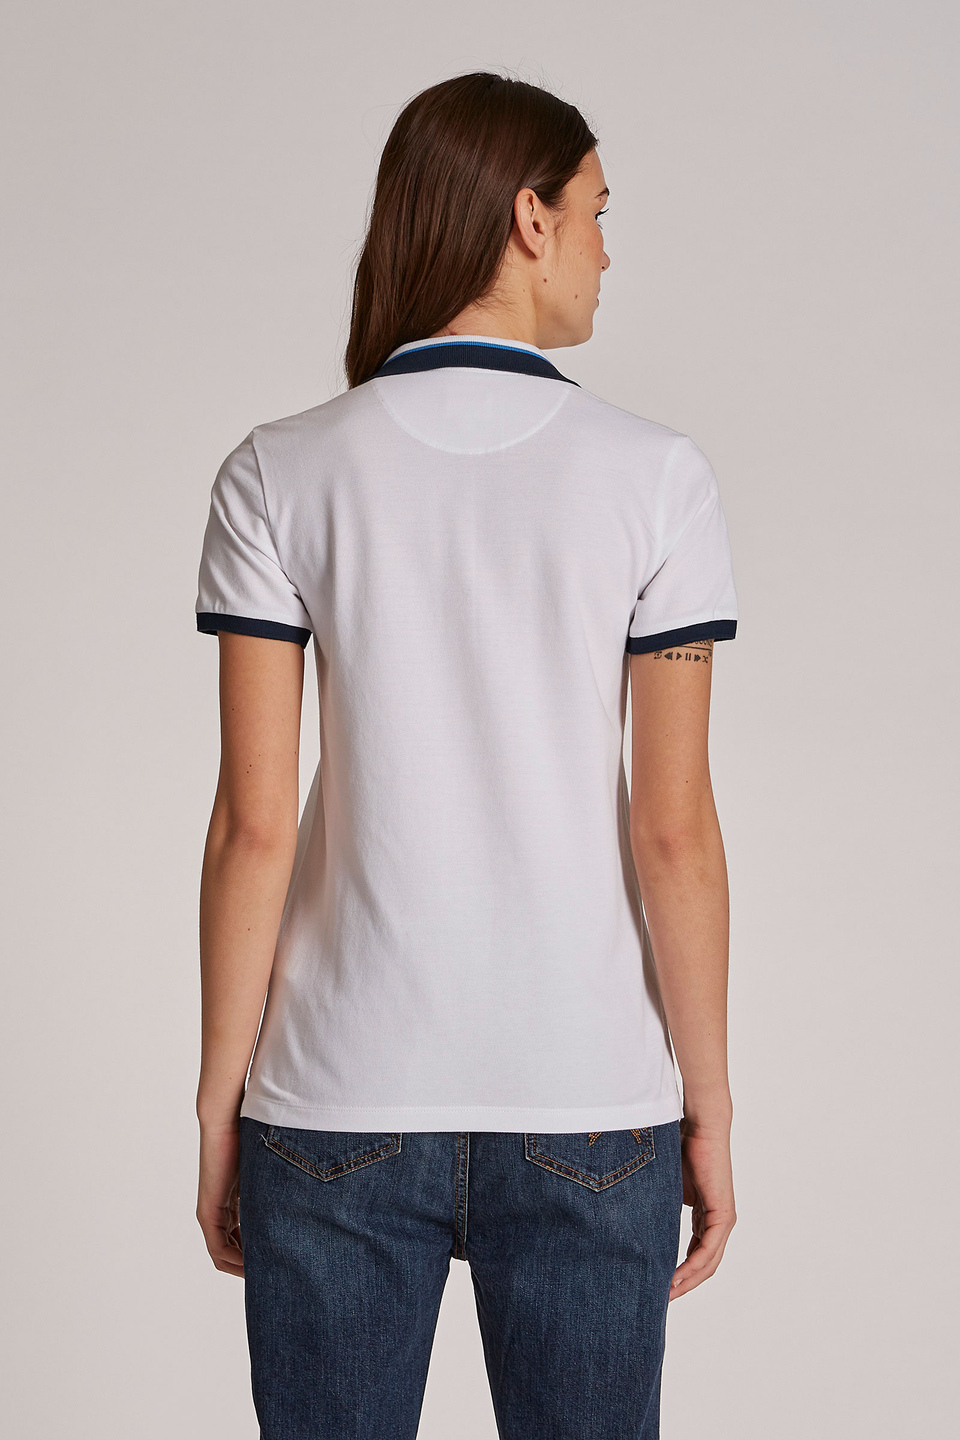 Damen-Poloshirt mit kurzem Arm aus 100 % Baumwolle im Regular Fit | La Martina - Official Online Shop